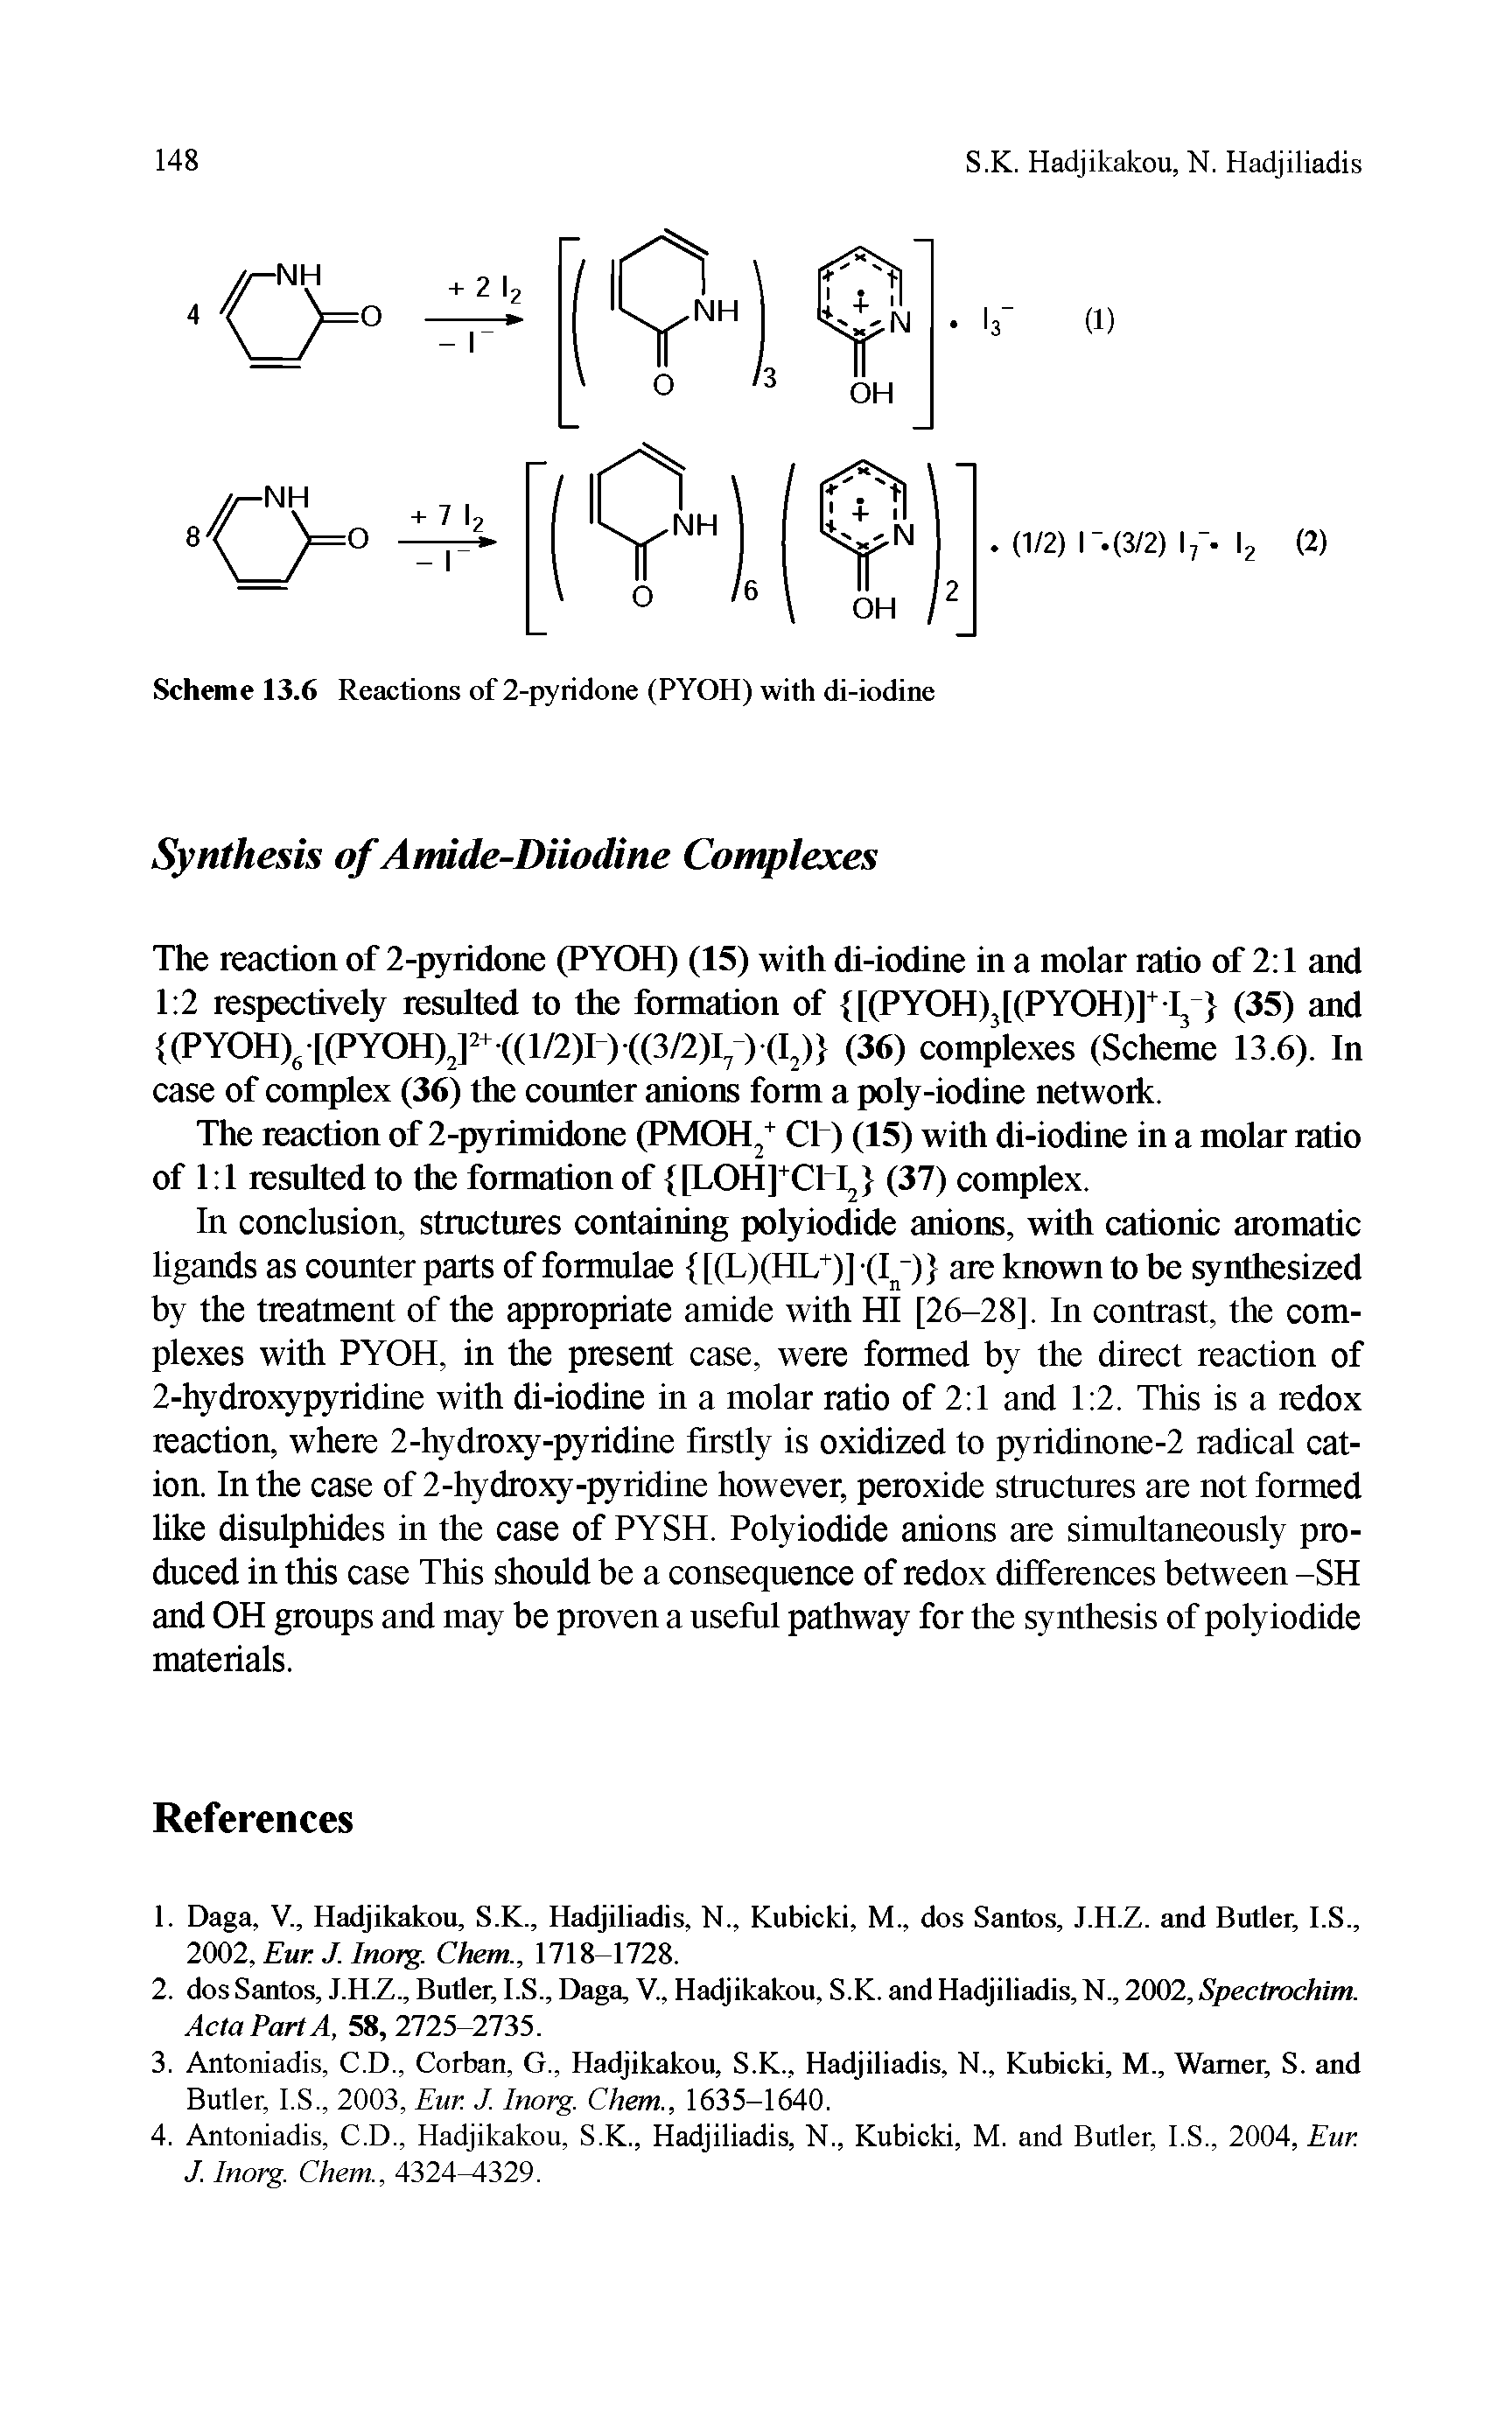 Scheme 13.6 Reactions of 2-pyridone (PYOH) with di-iodine...